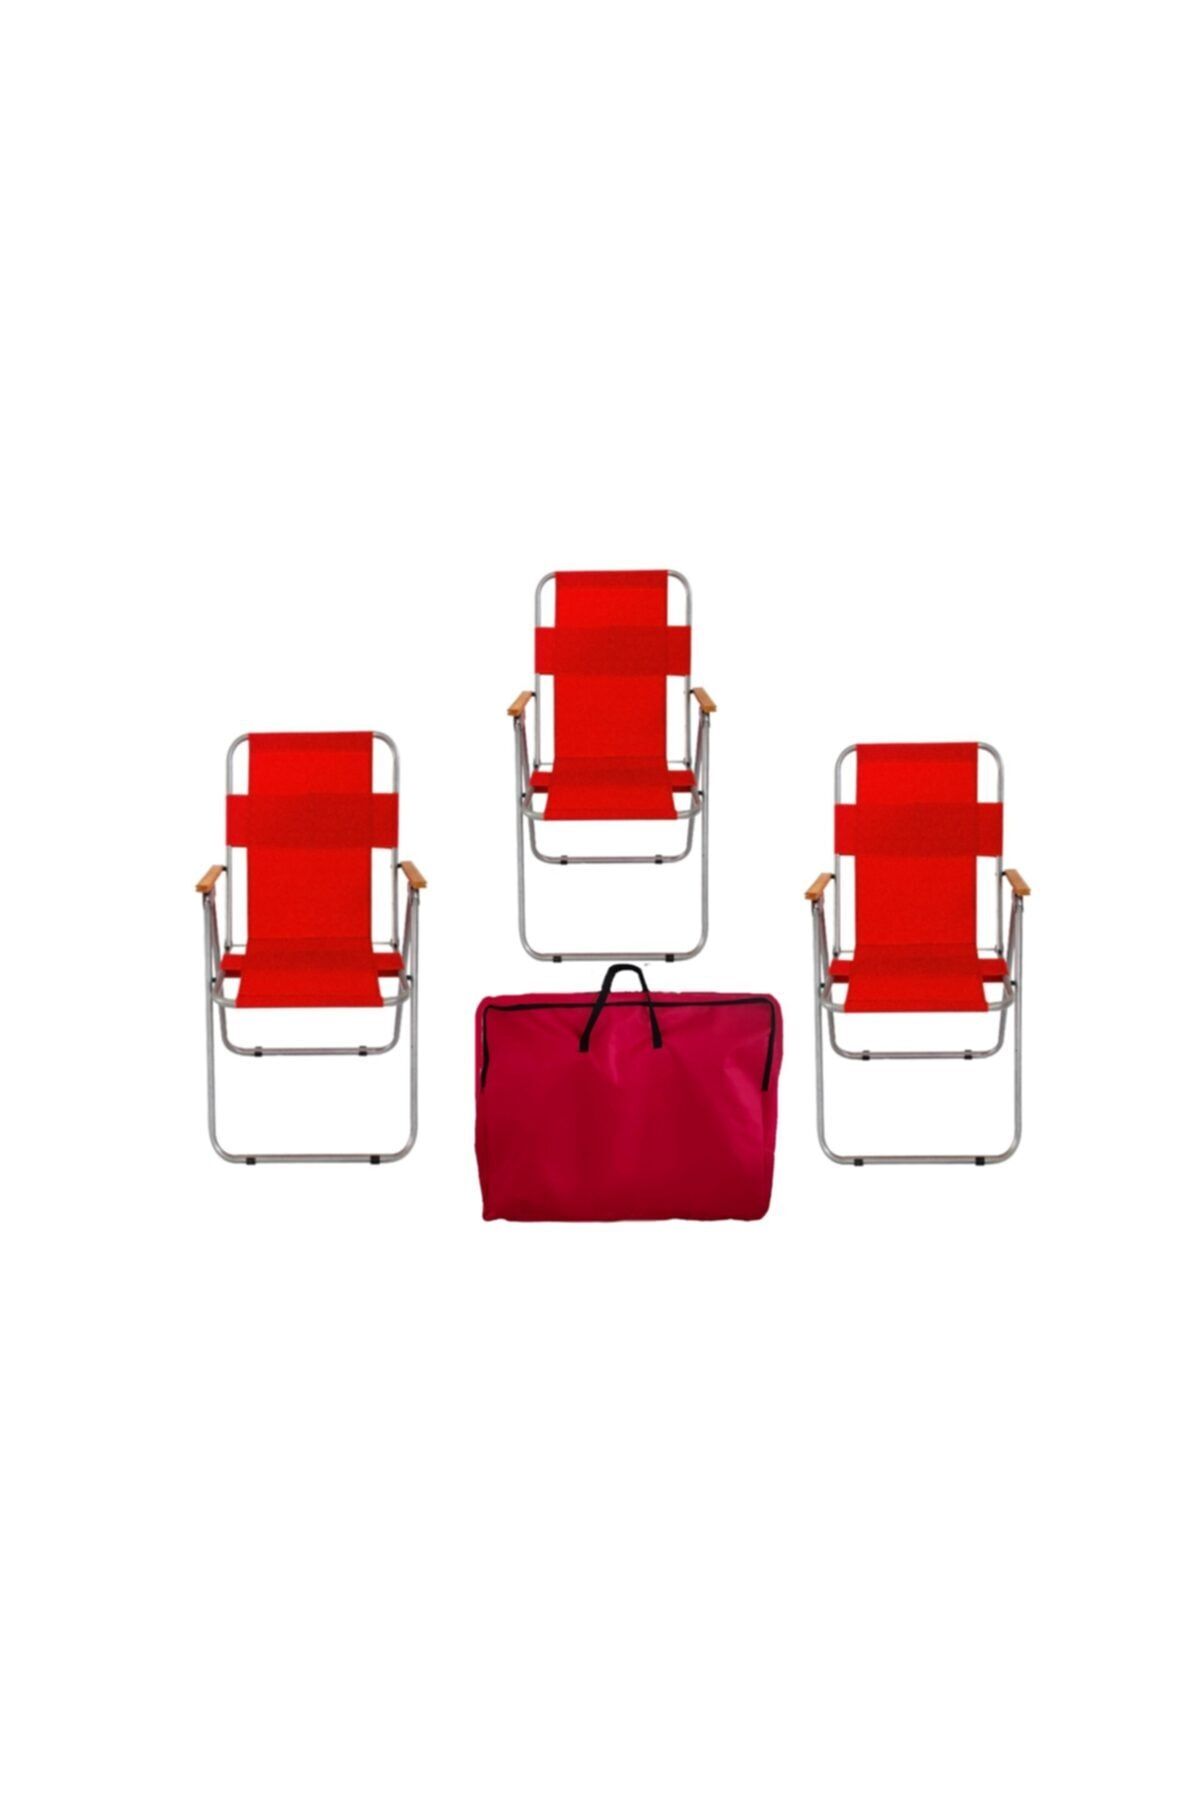 İbay Metal 3 Kırmızı Ahşap Kollu Bahçe Piknik Plaj Sandalyesi Kırmızı Çantalı